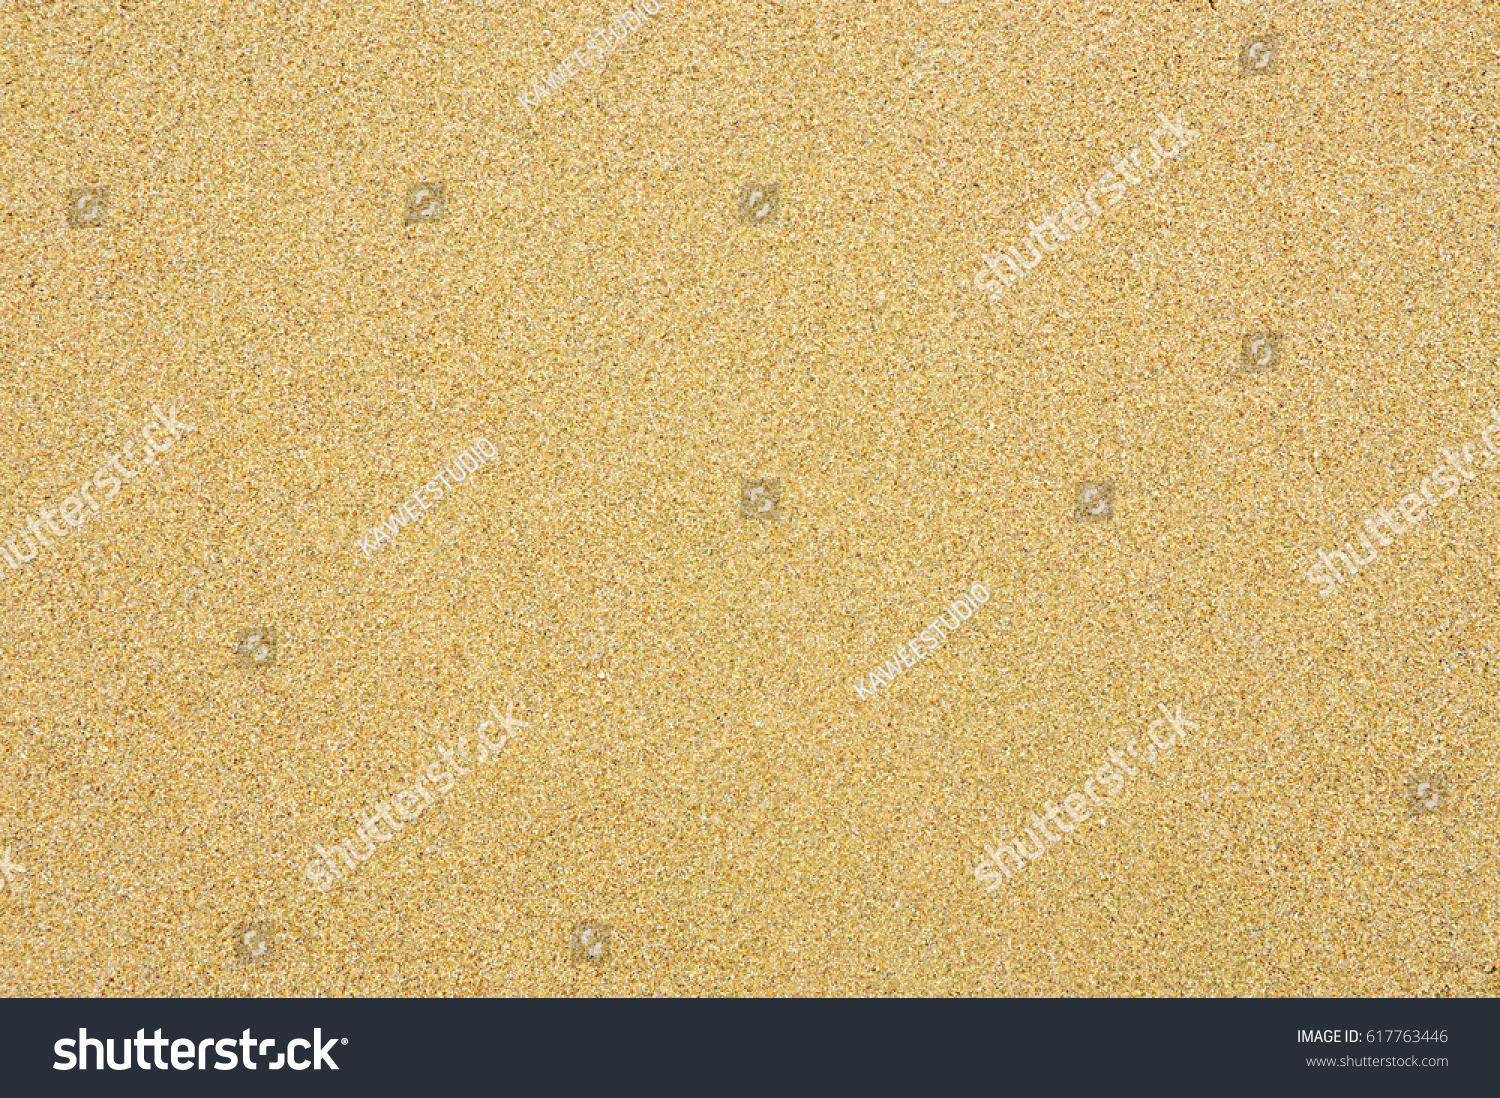 Fine Gold Sand Texture Seamless Sand Stock Photo 617763446 | Shutterstock